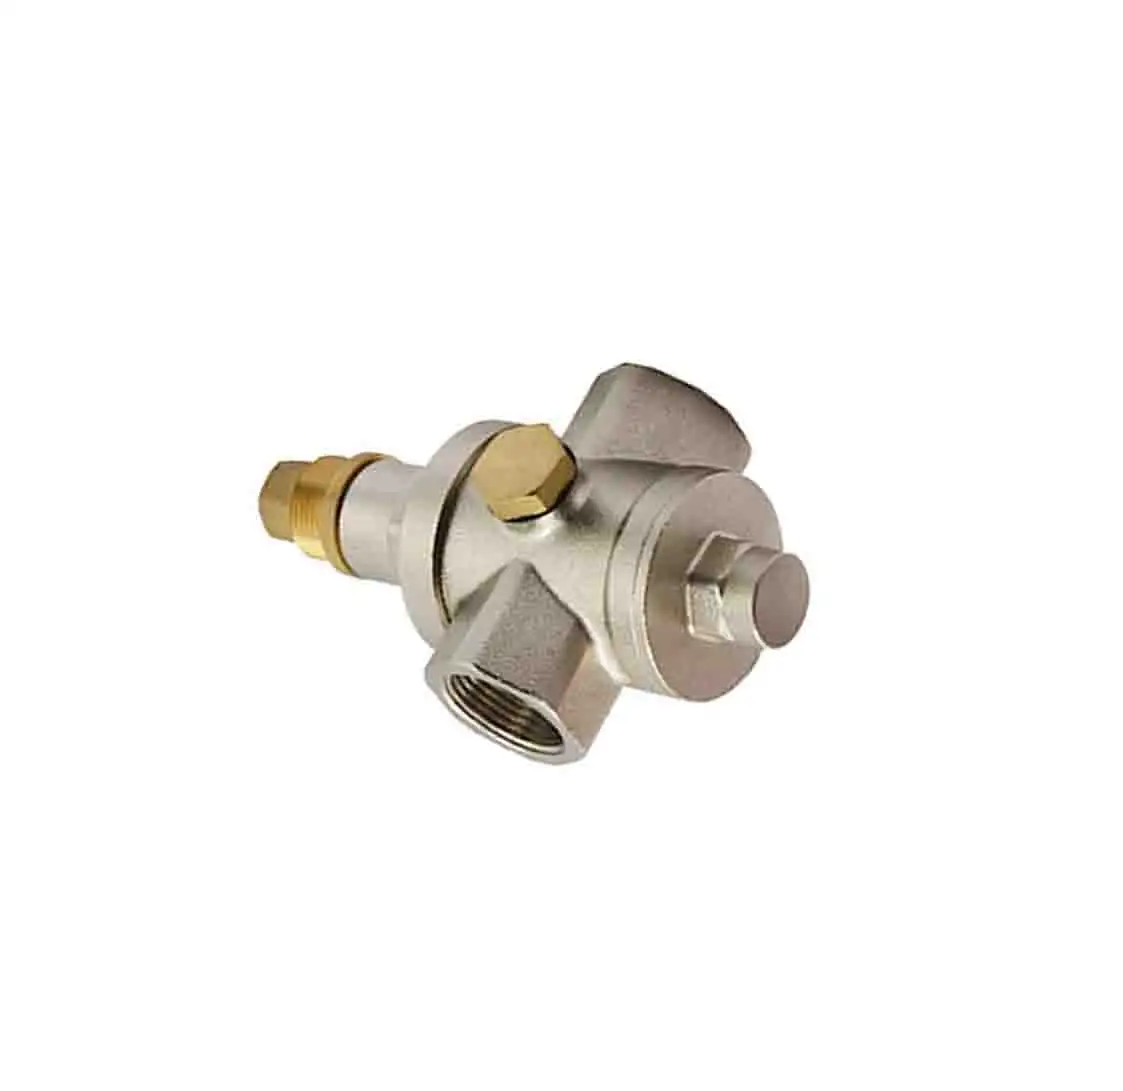 forged brass water pressure safety valve for regulator